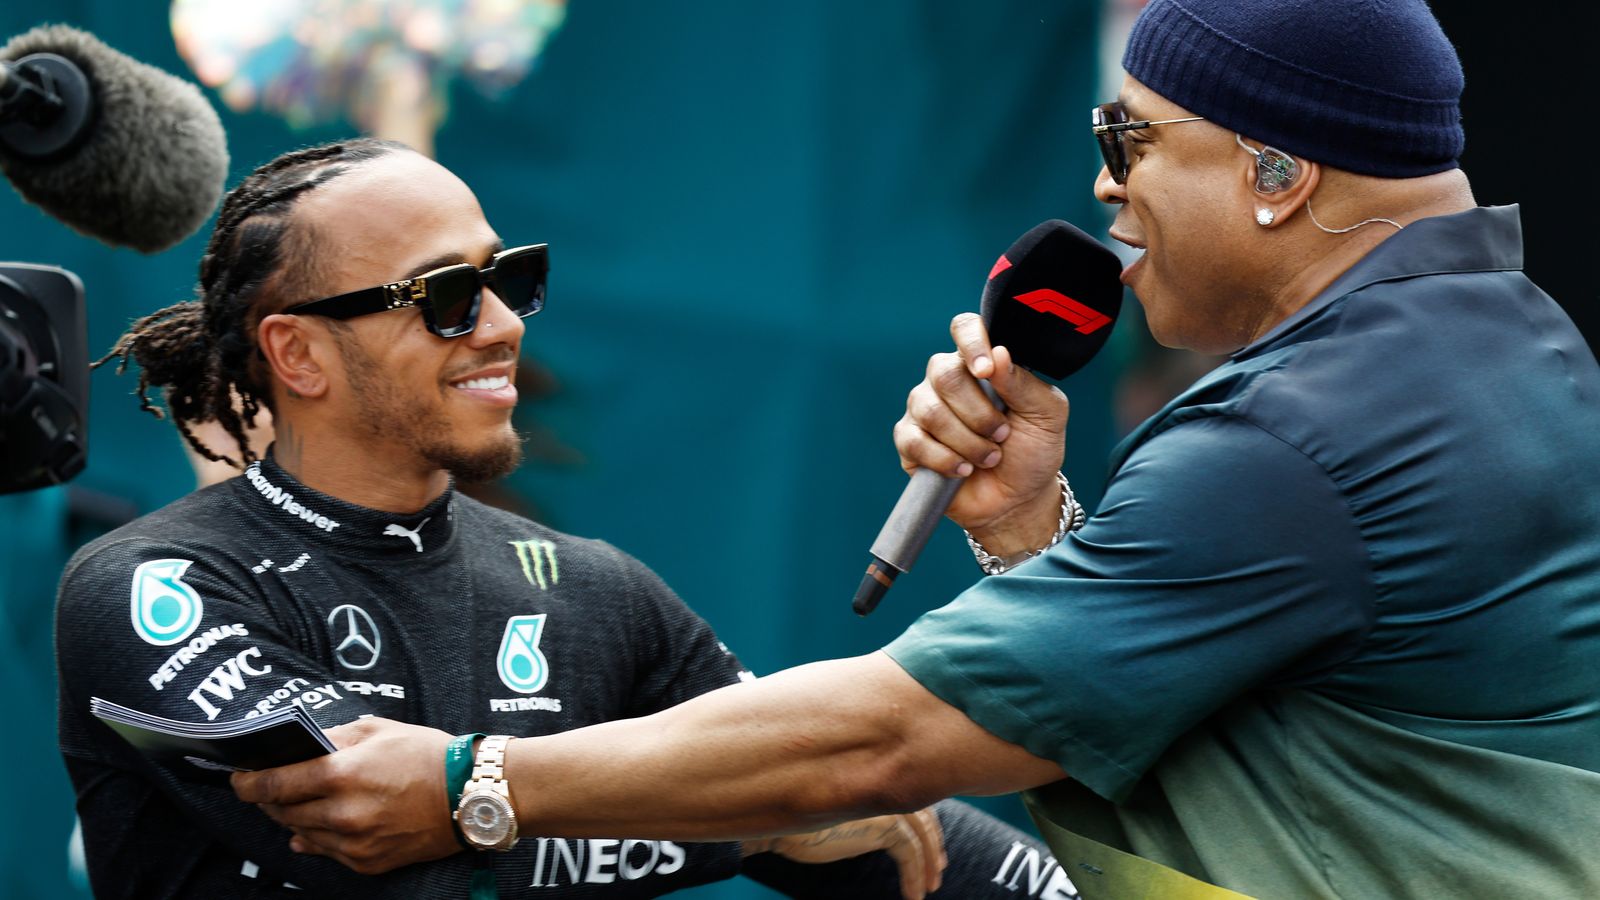 Miami GP: Pengenalan pra-balapan LL Cool J ditinjau oleh Lewis Hamilton, Max Verstappen dan pembalap lain |  Berita F1